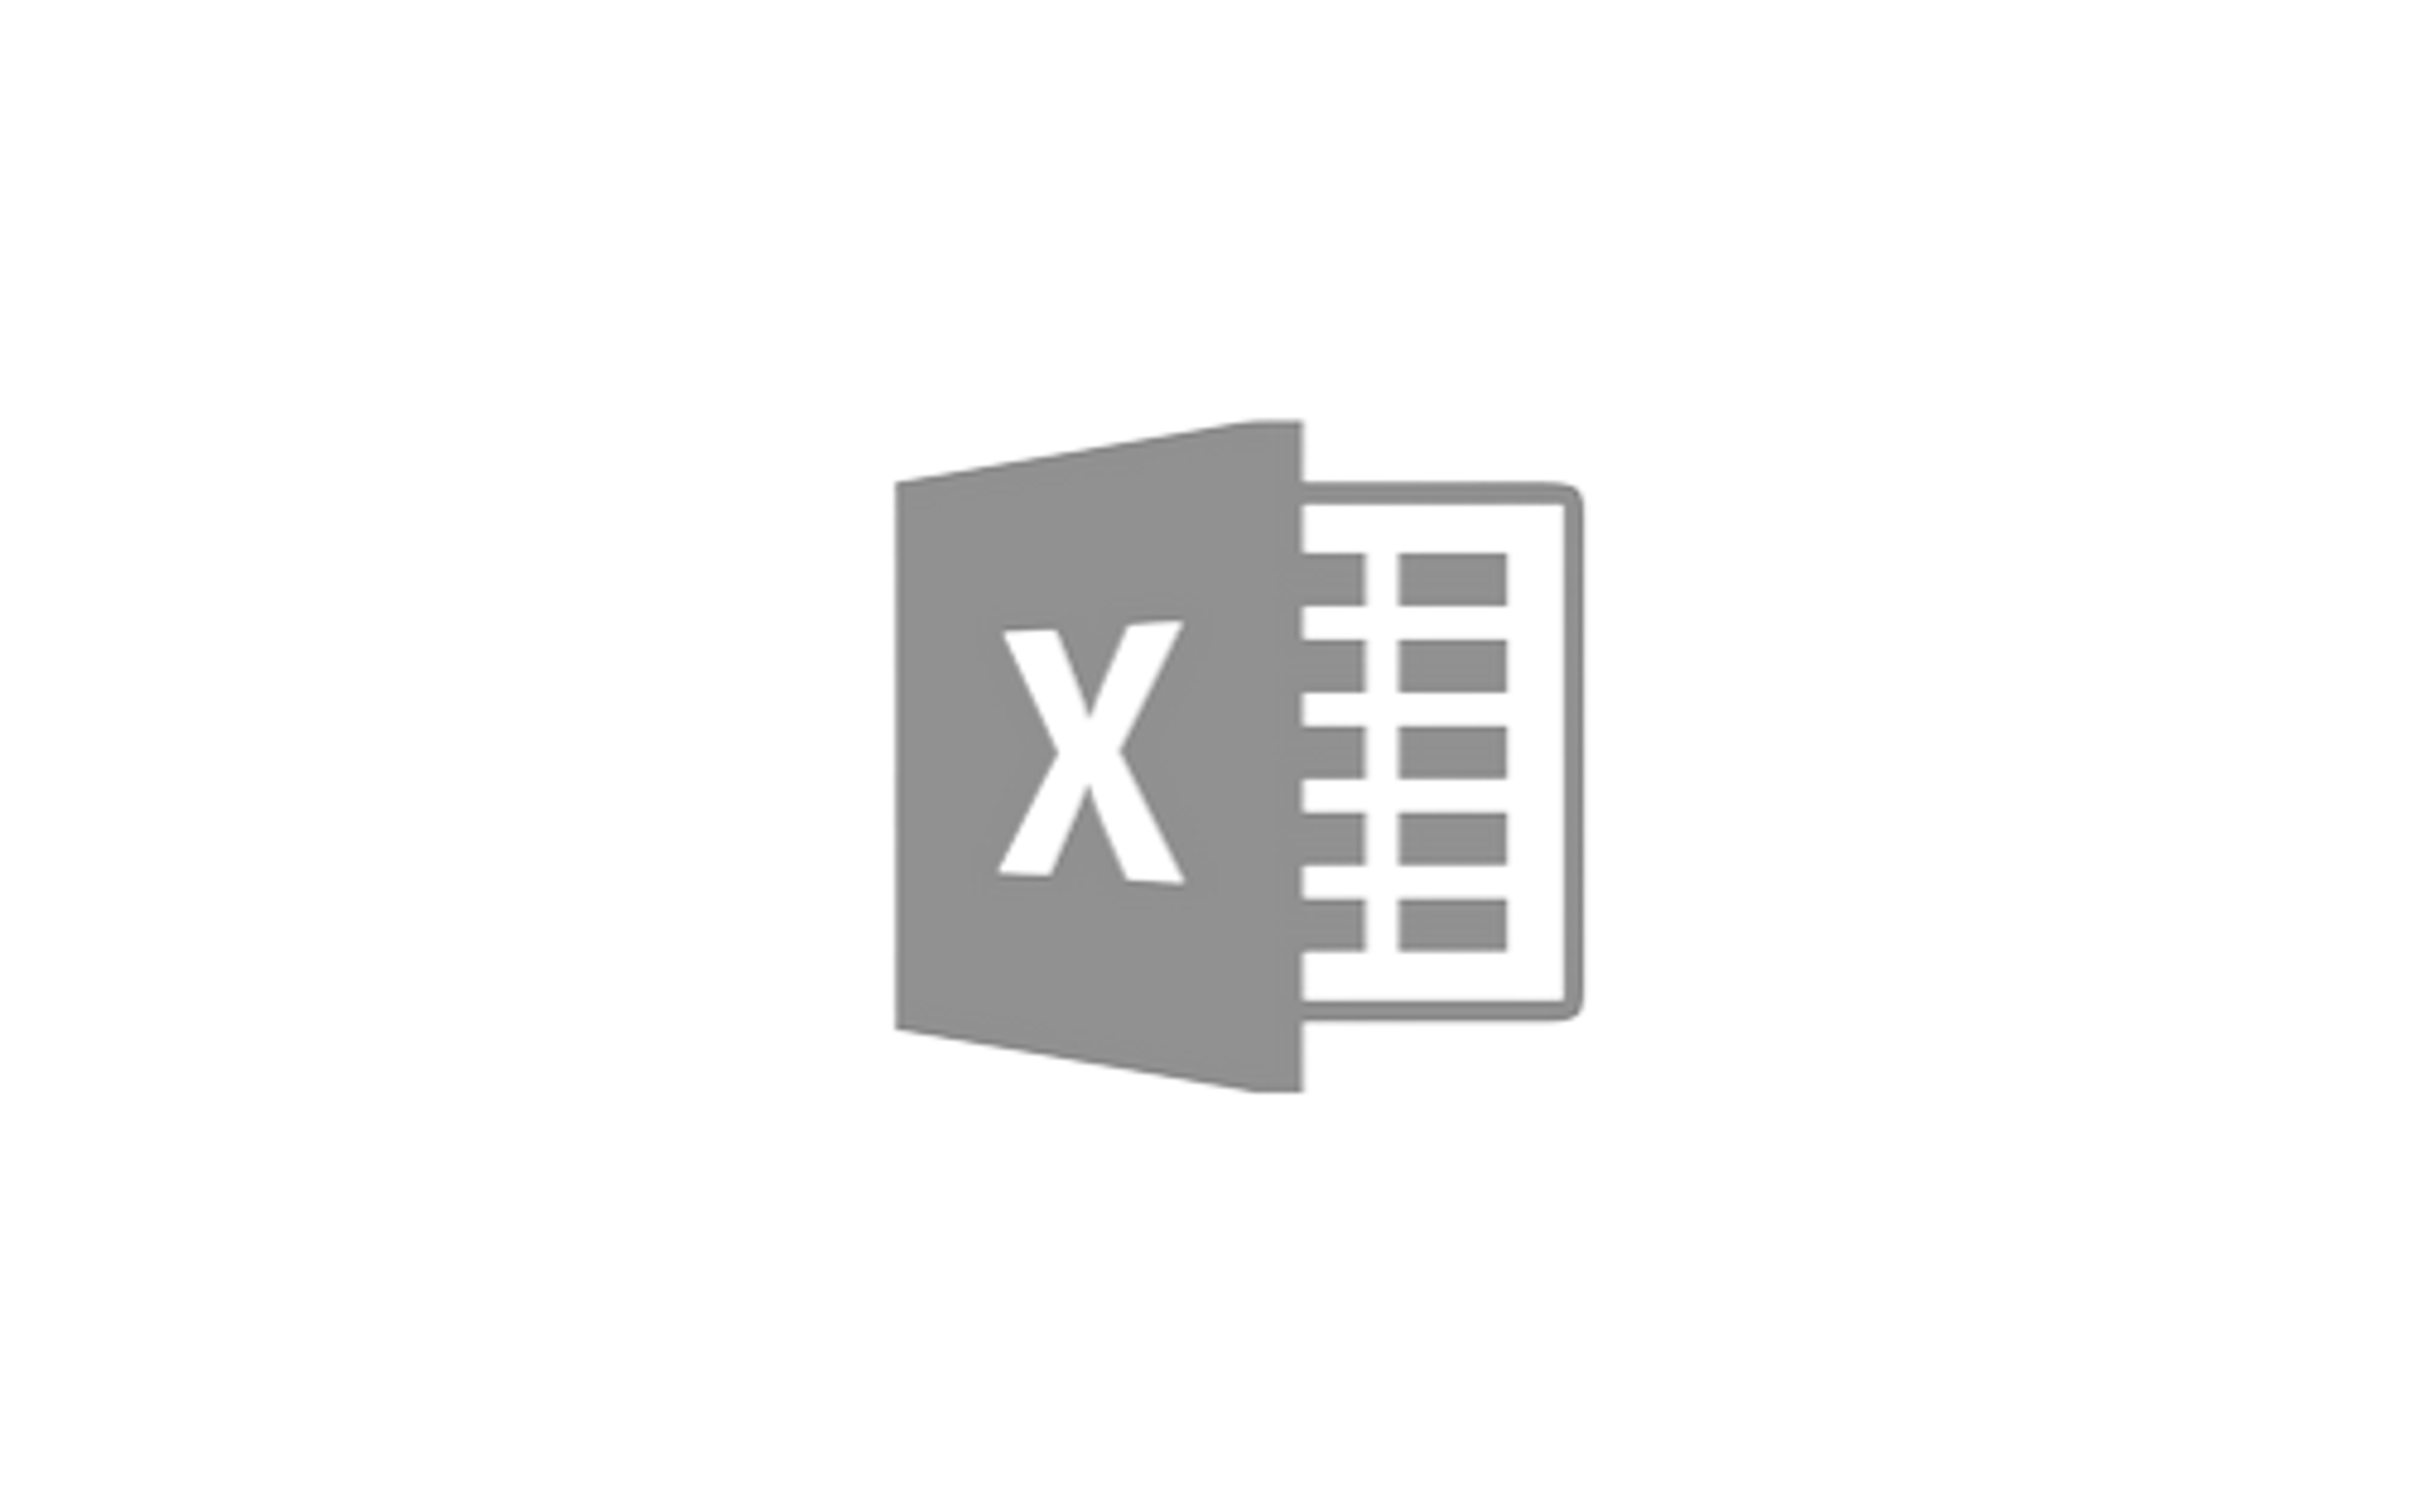 Excel 로고